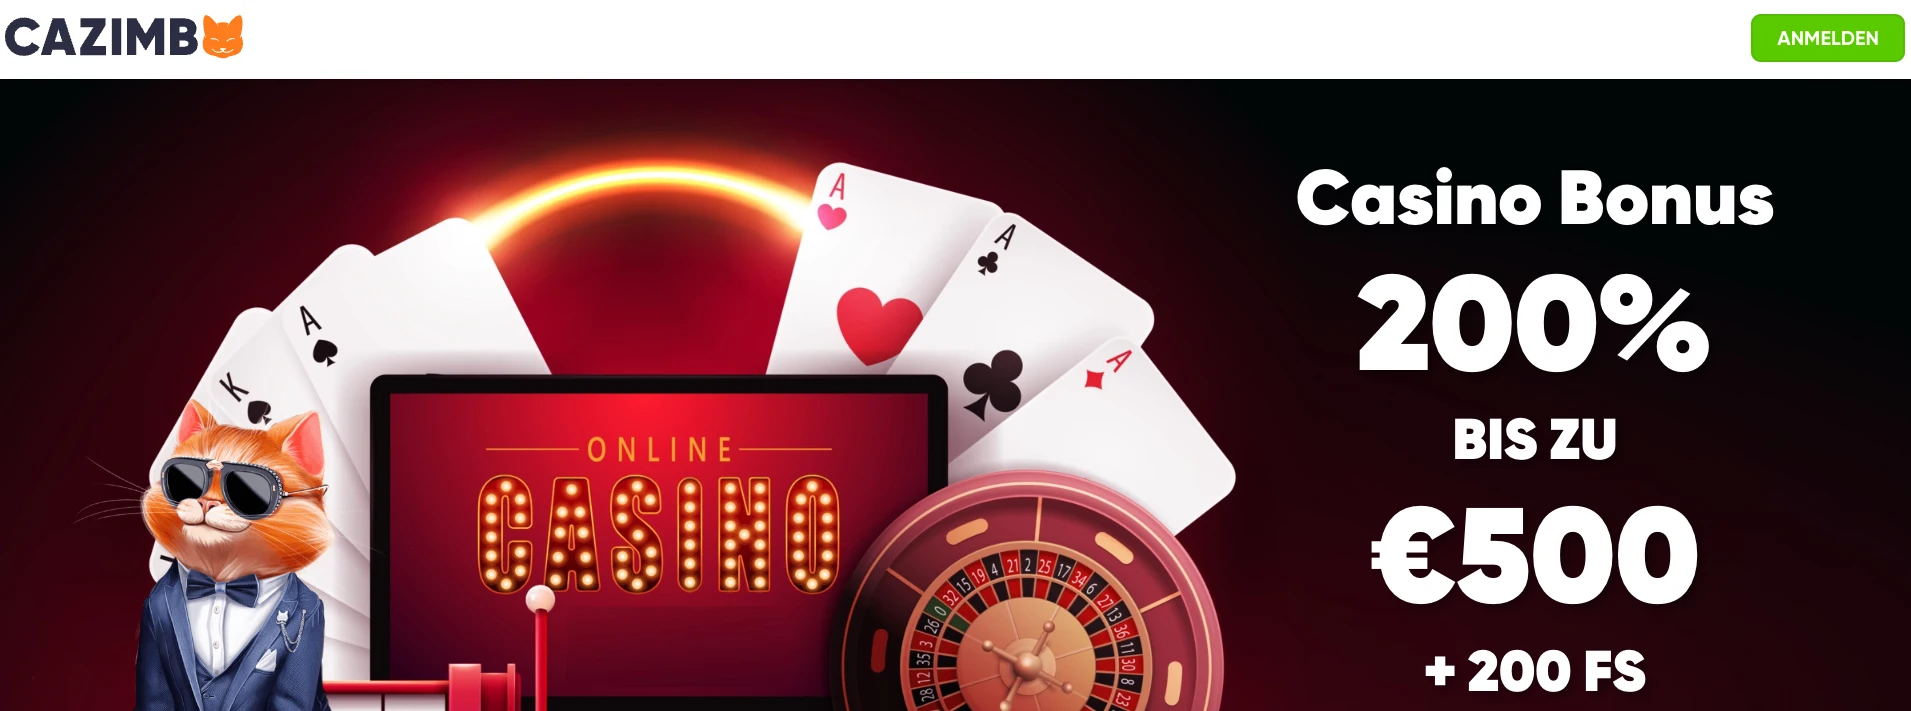 Cazimbo 200% Casino Bonus